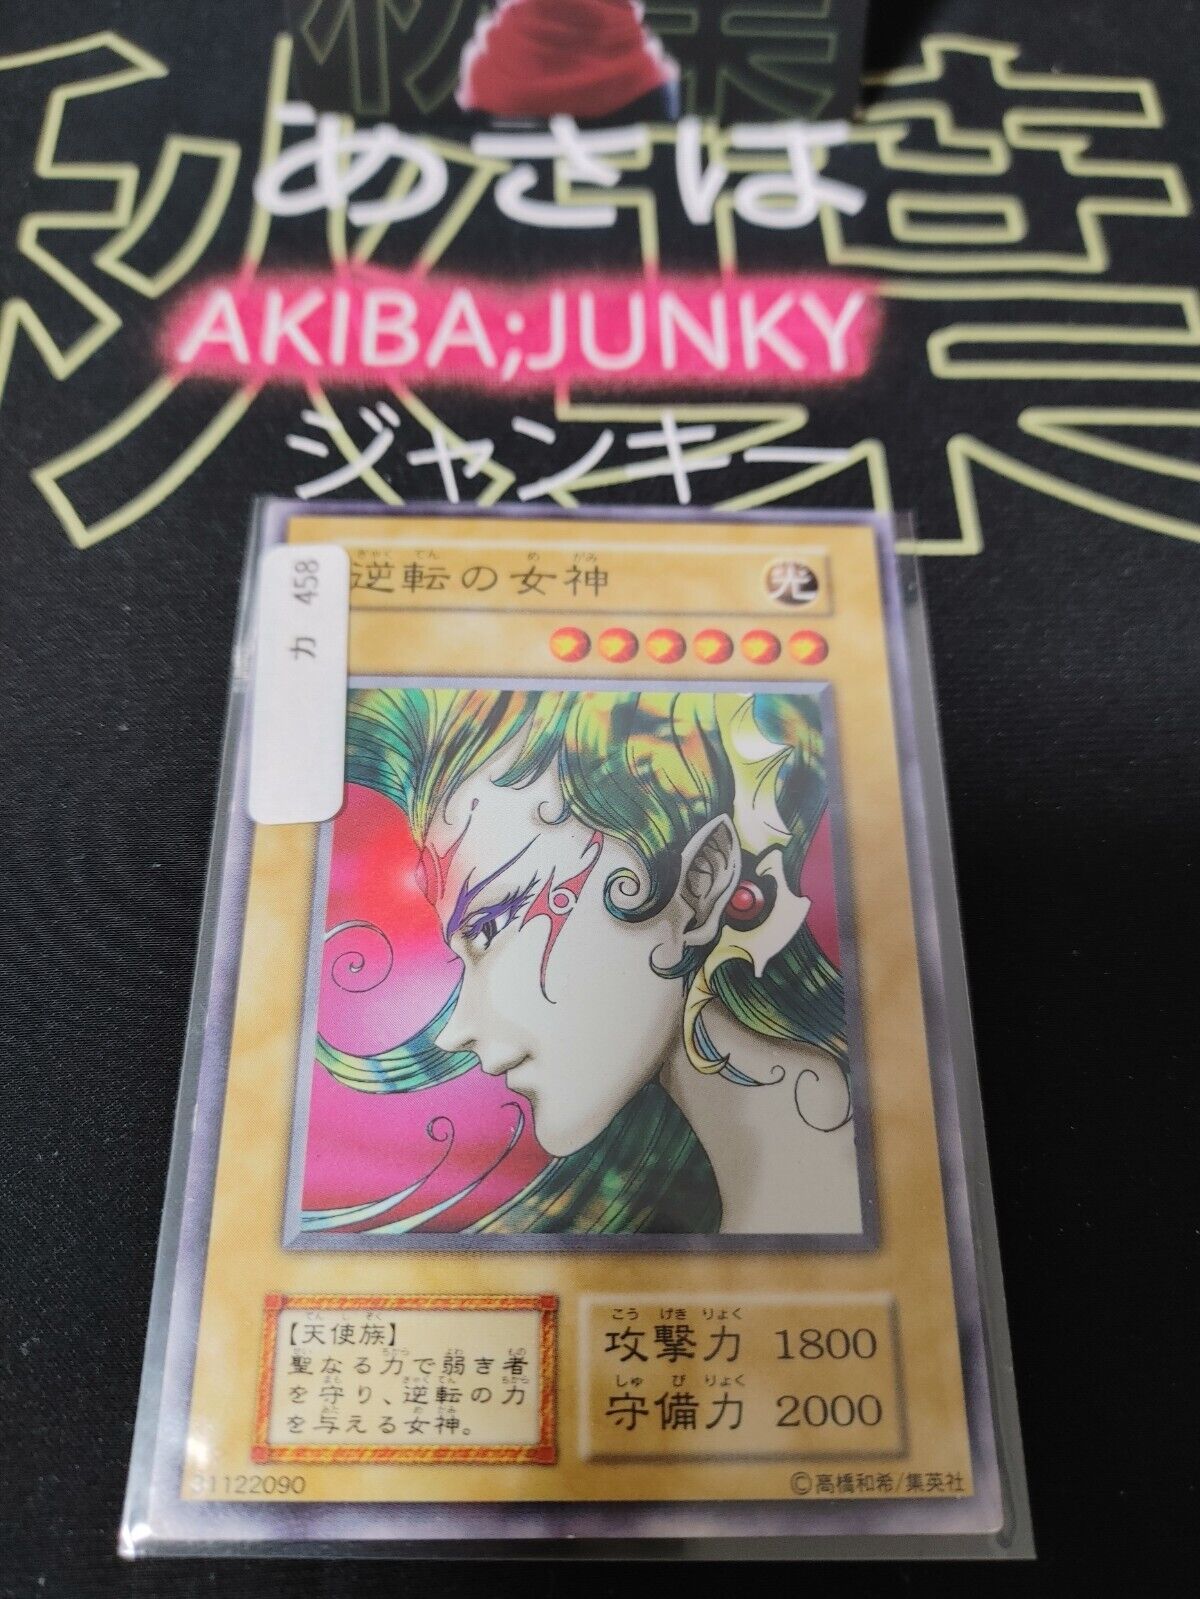 Gyakutenno Megami Yu-Gi-Oh Yugioh Retro Card 31122090 Konami JAPAN